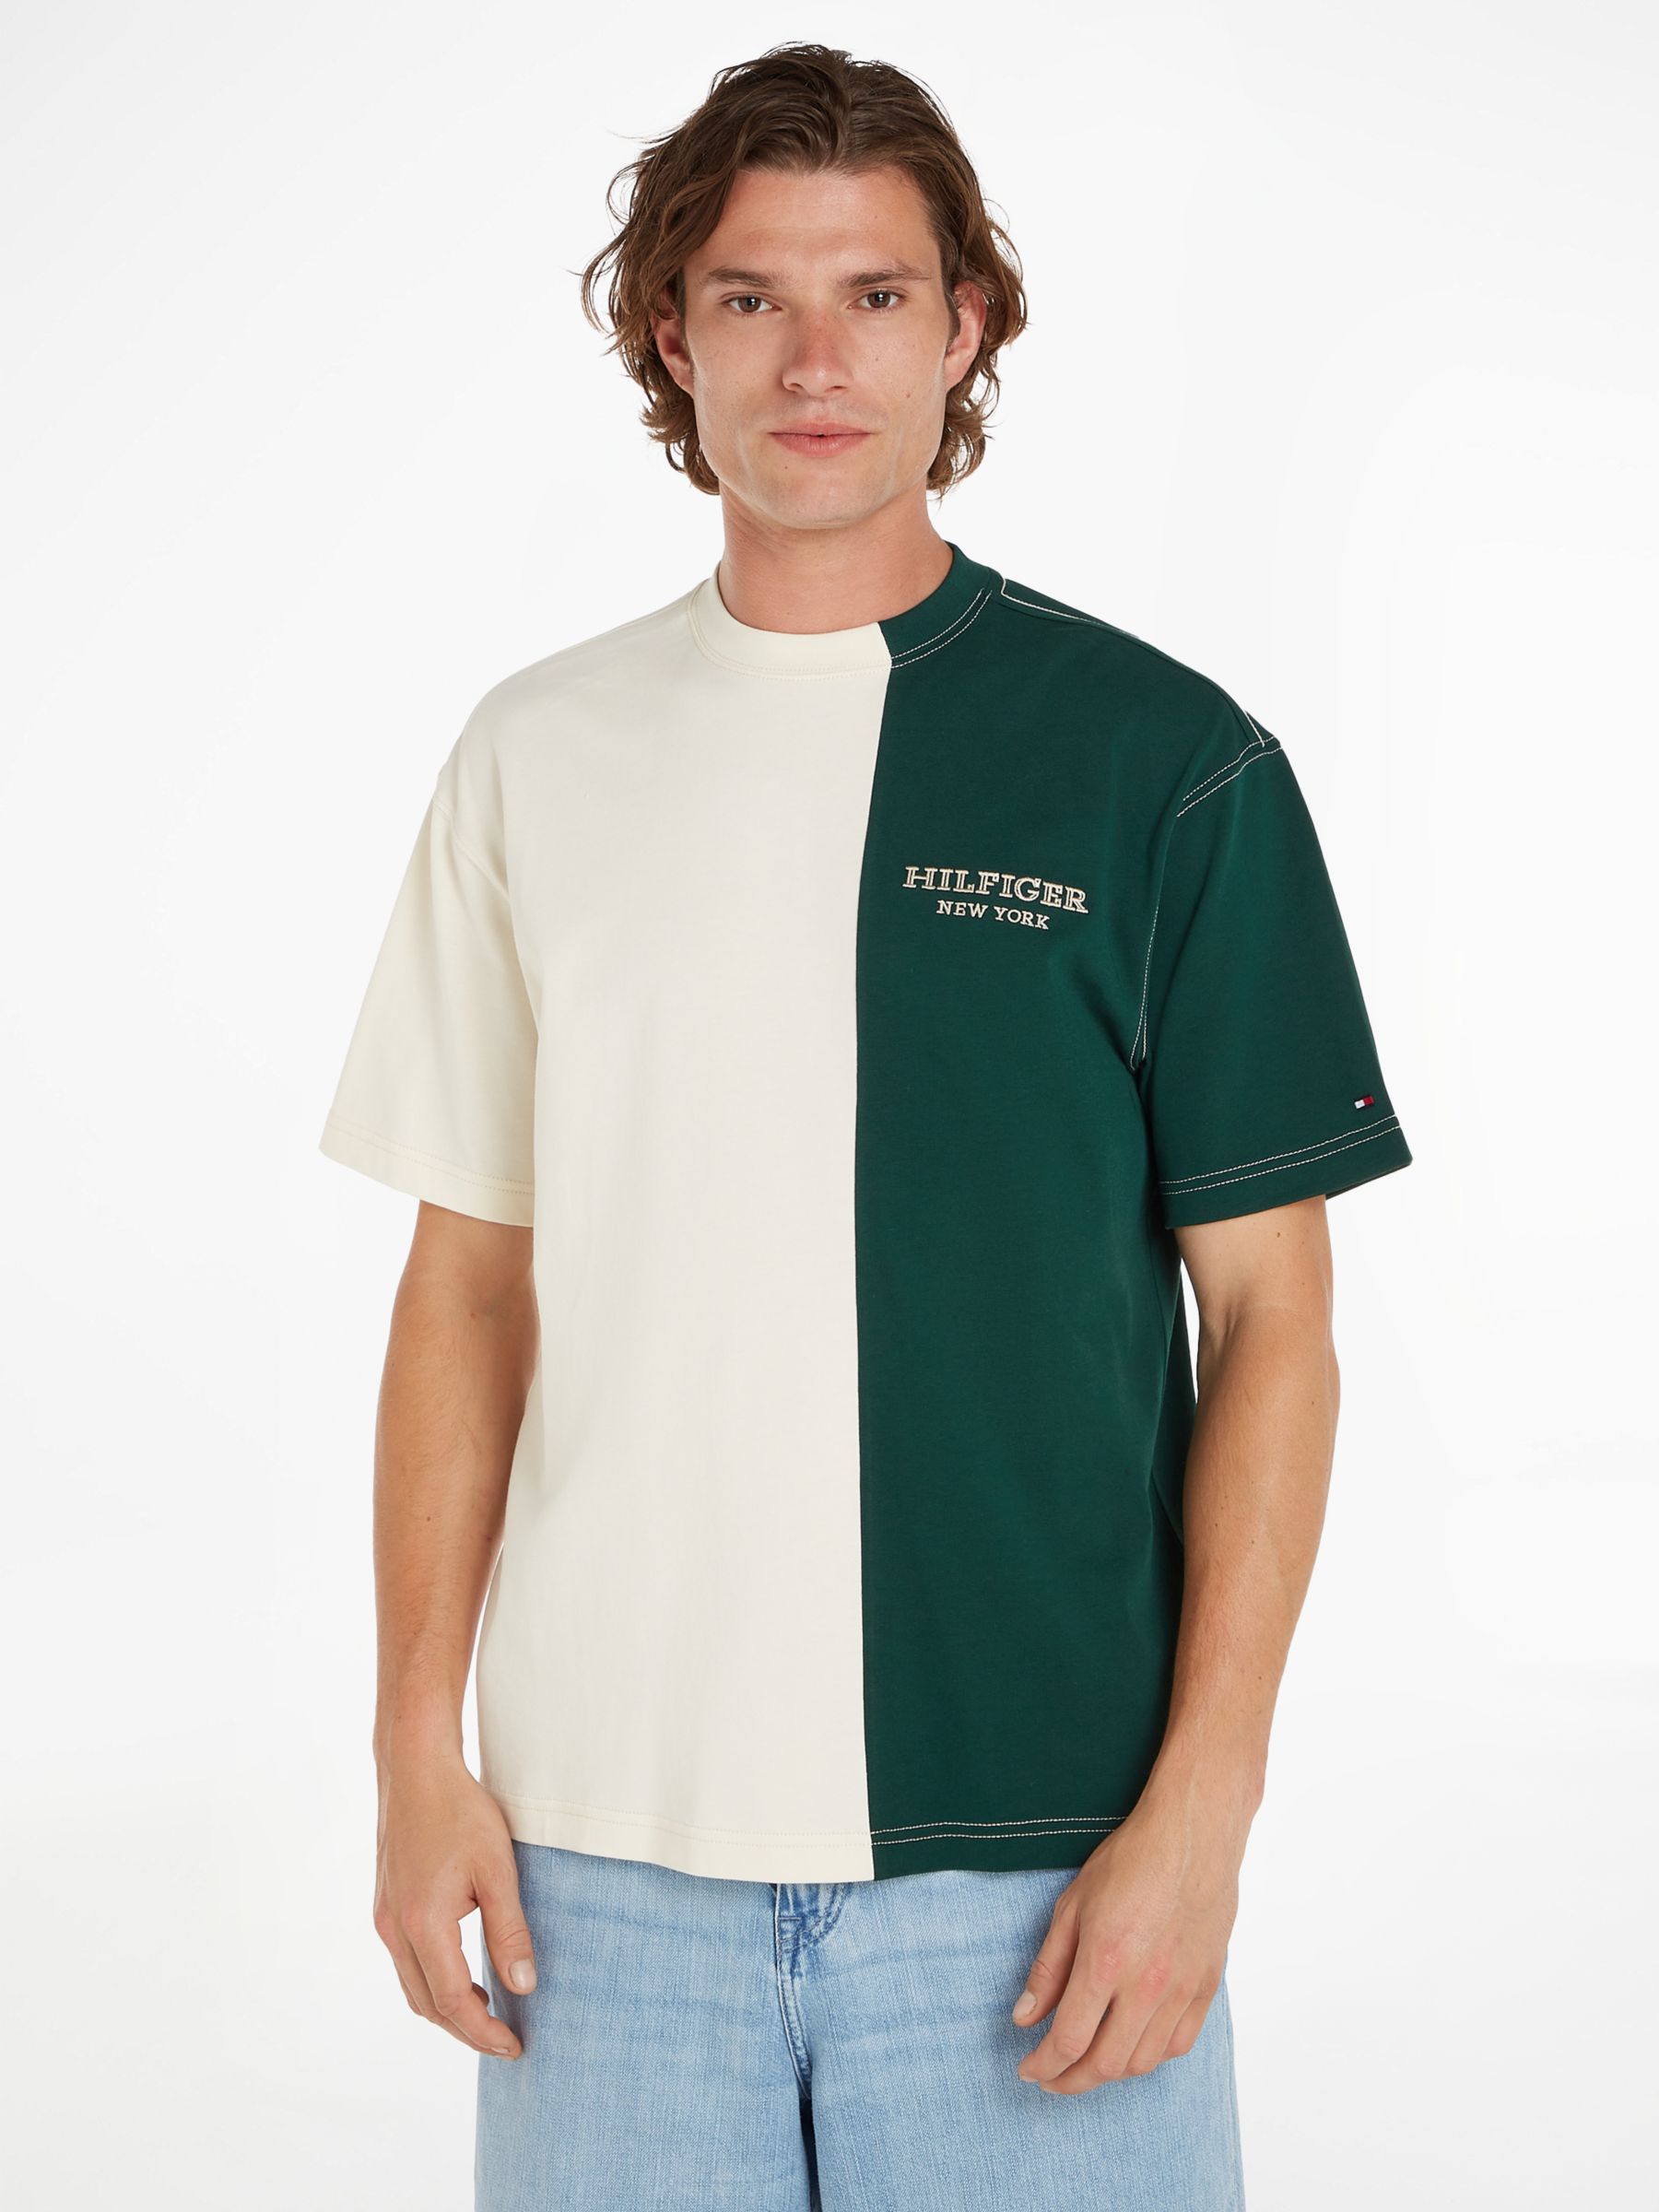 Tommy Hilfiger Colourblock T-Shirt, White/Multi, L